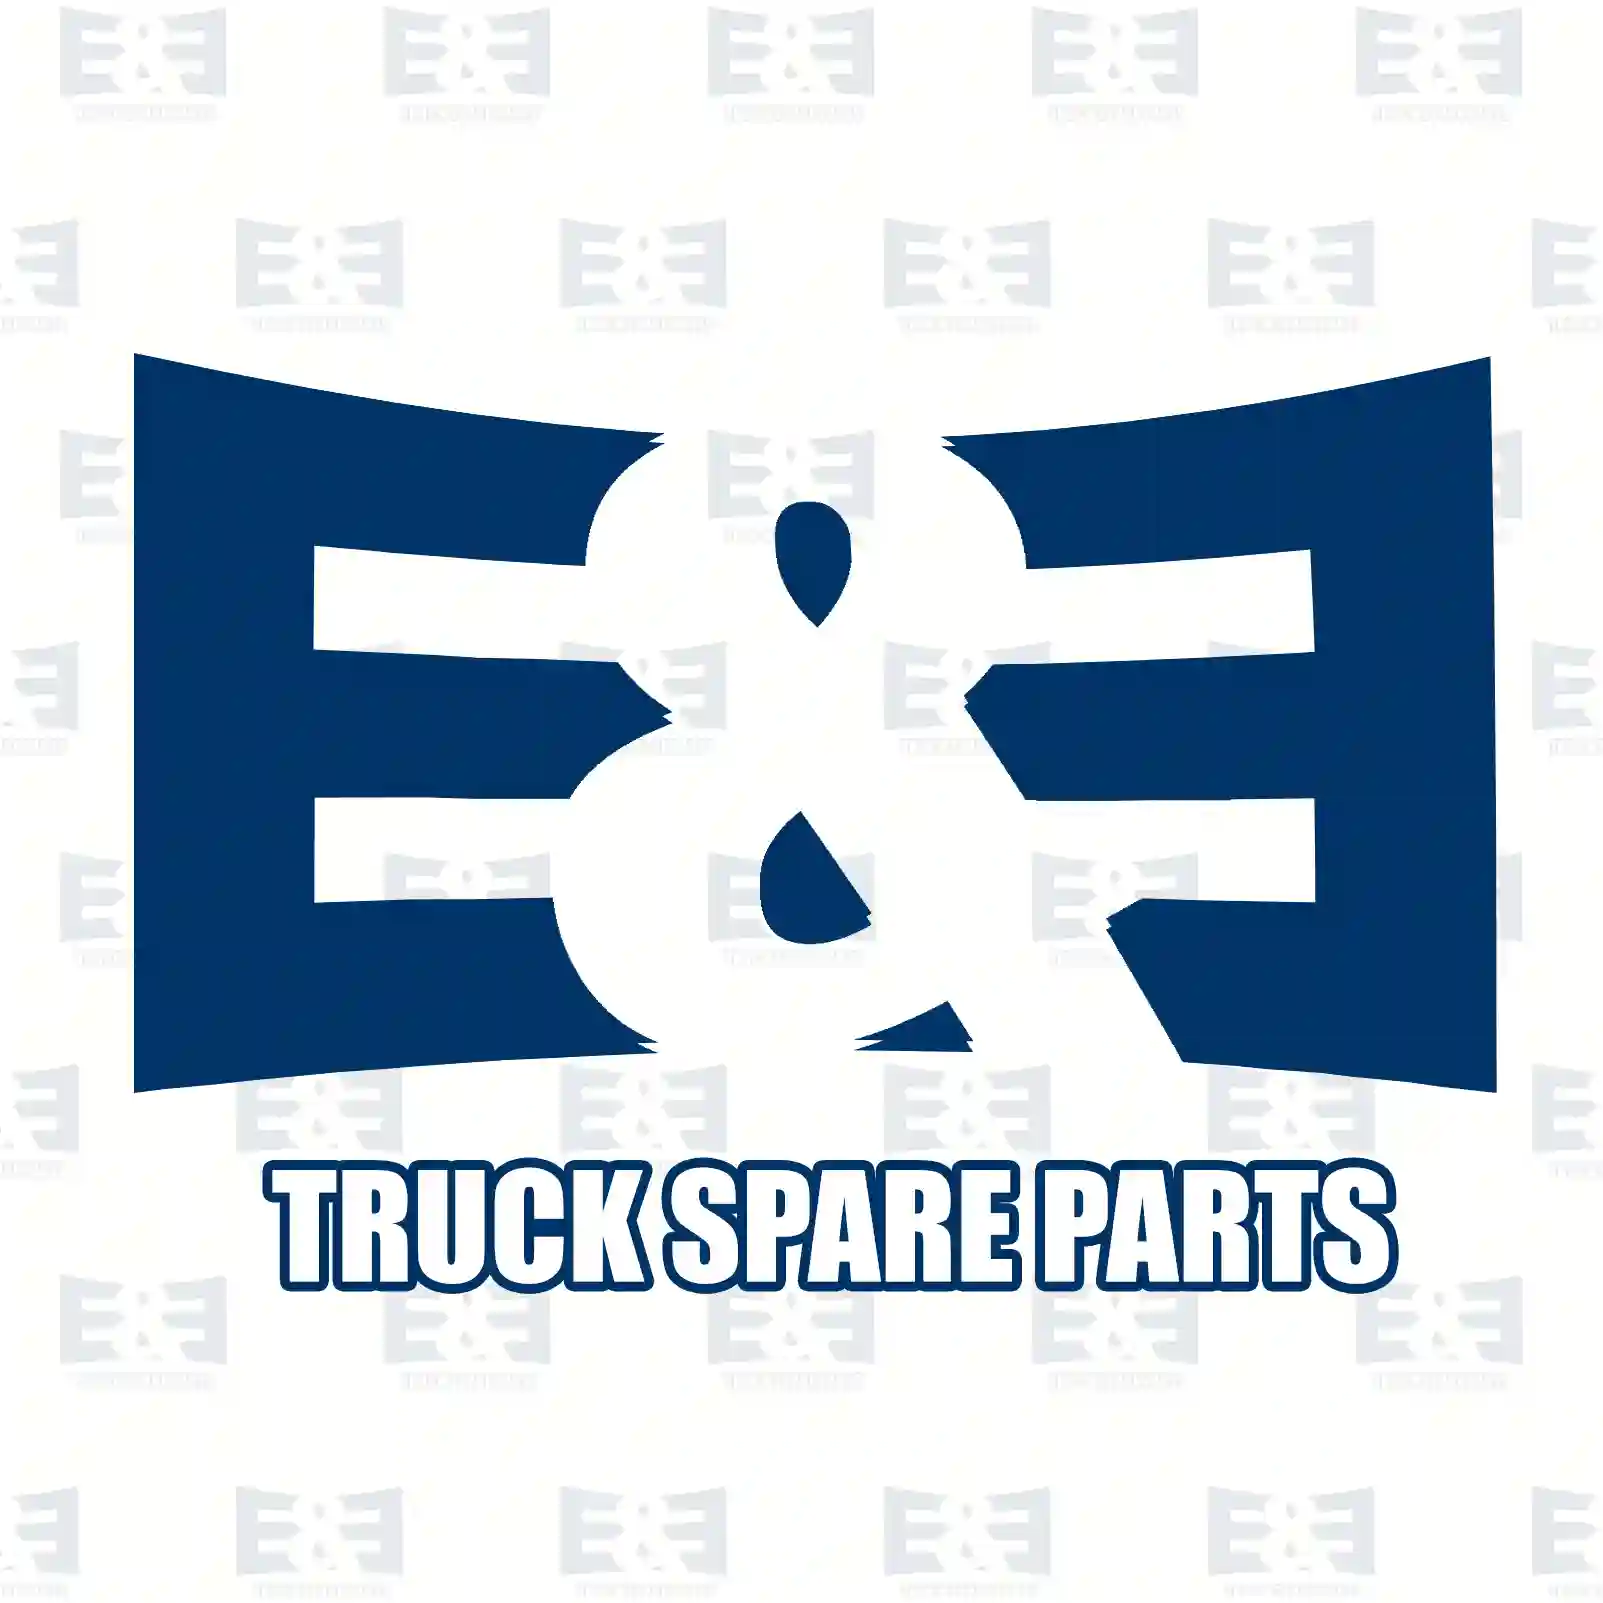 Bushing, king pin, 2E2270899, 1301106, 134488, 175998 ||  2E2270899 E&E Truck Spare Parts | Truck Spare Parts, Auotomotive Spare Parts Bushing, king pin, 2E2270899, 1301106, 134488, 175998 ||  2E2270899 E&E Truck Spare Parts | Truck Spare Parts, Auotomotive Spare Parts